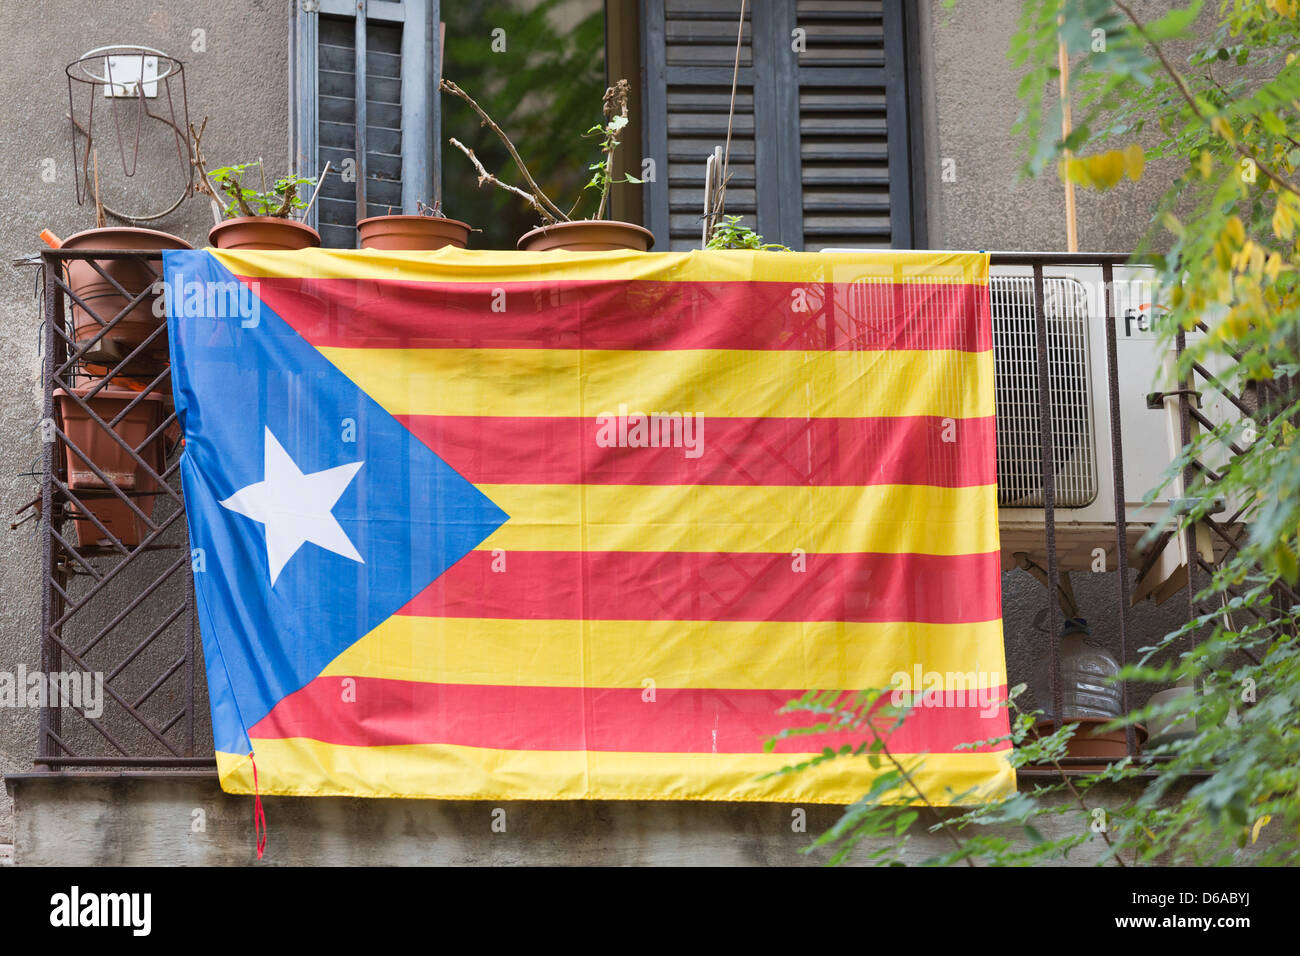 Flag of Catalonia, Catalunya, hanging from a balcony in Barcelona Stock Photo